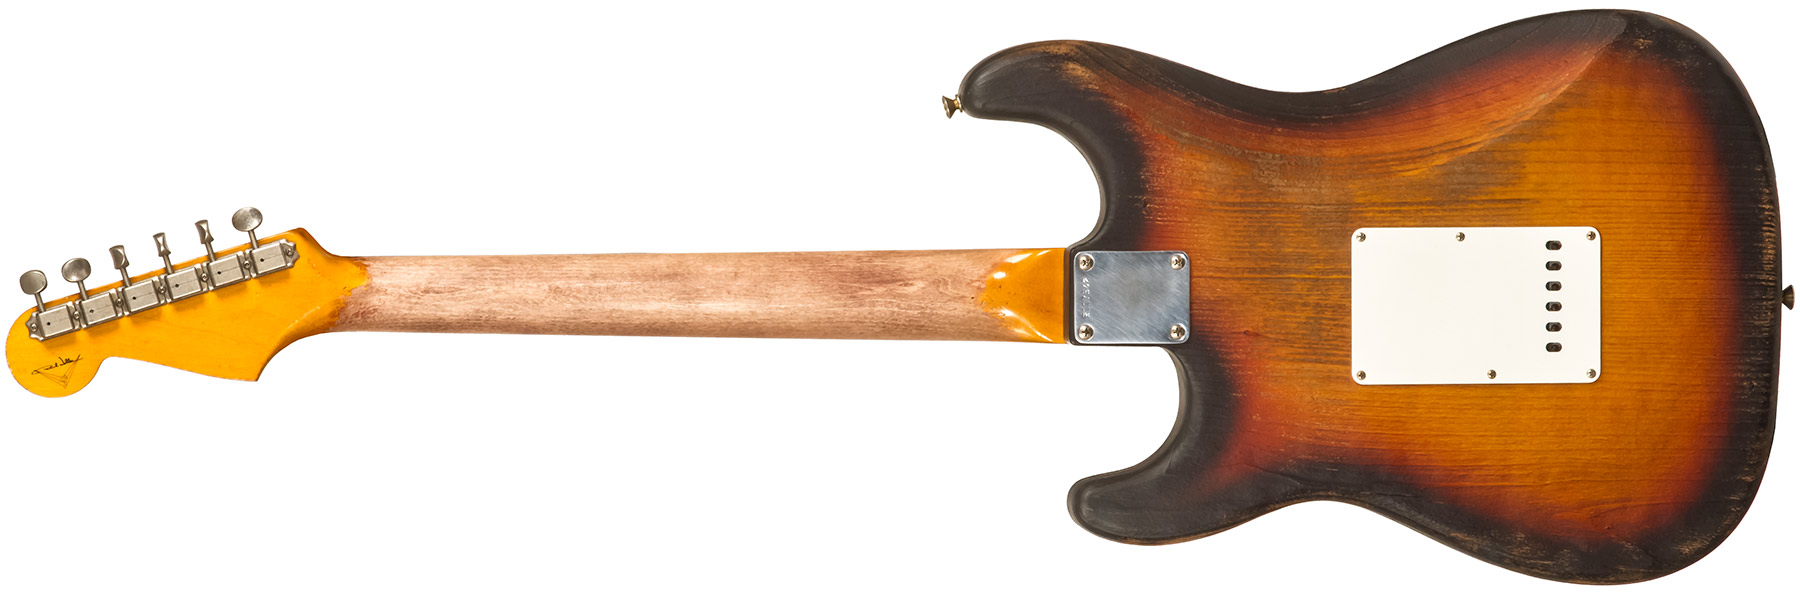 Fender Custom Shop Strat Sandblasted Masterbuilt P.walker #r117542 - Heavy Relic 3-color Sunburst - Str shape electric guitar - Variation 1